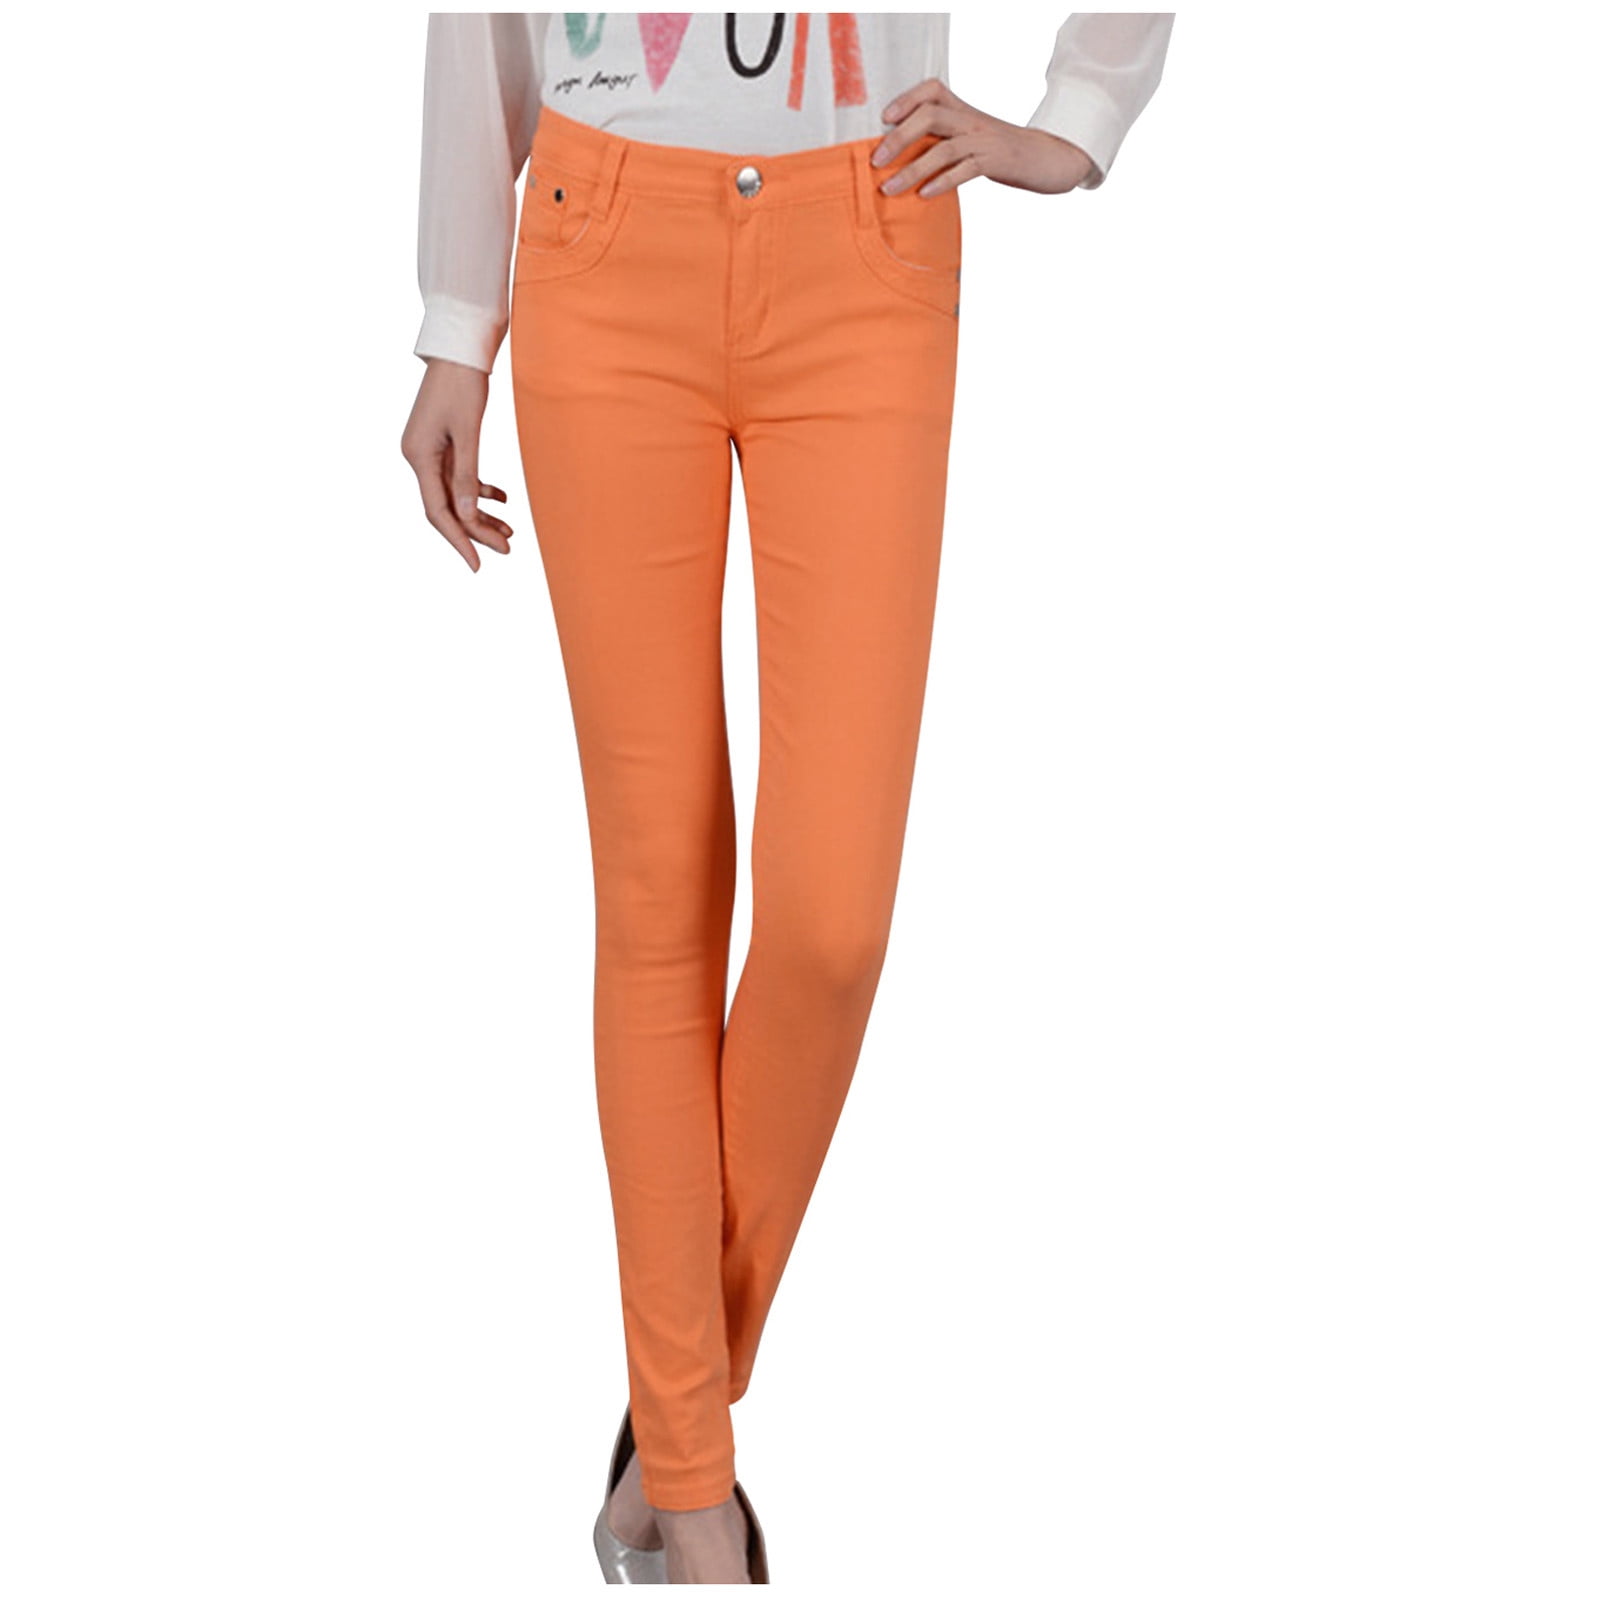 WREESH Womens Jeans Candy Pencil Pants Colorful Feet Denim Pants Orange ...